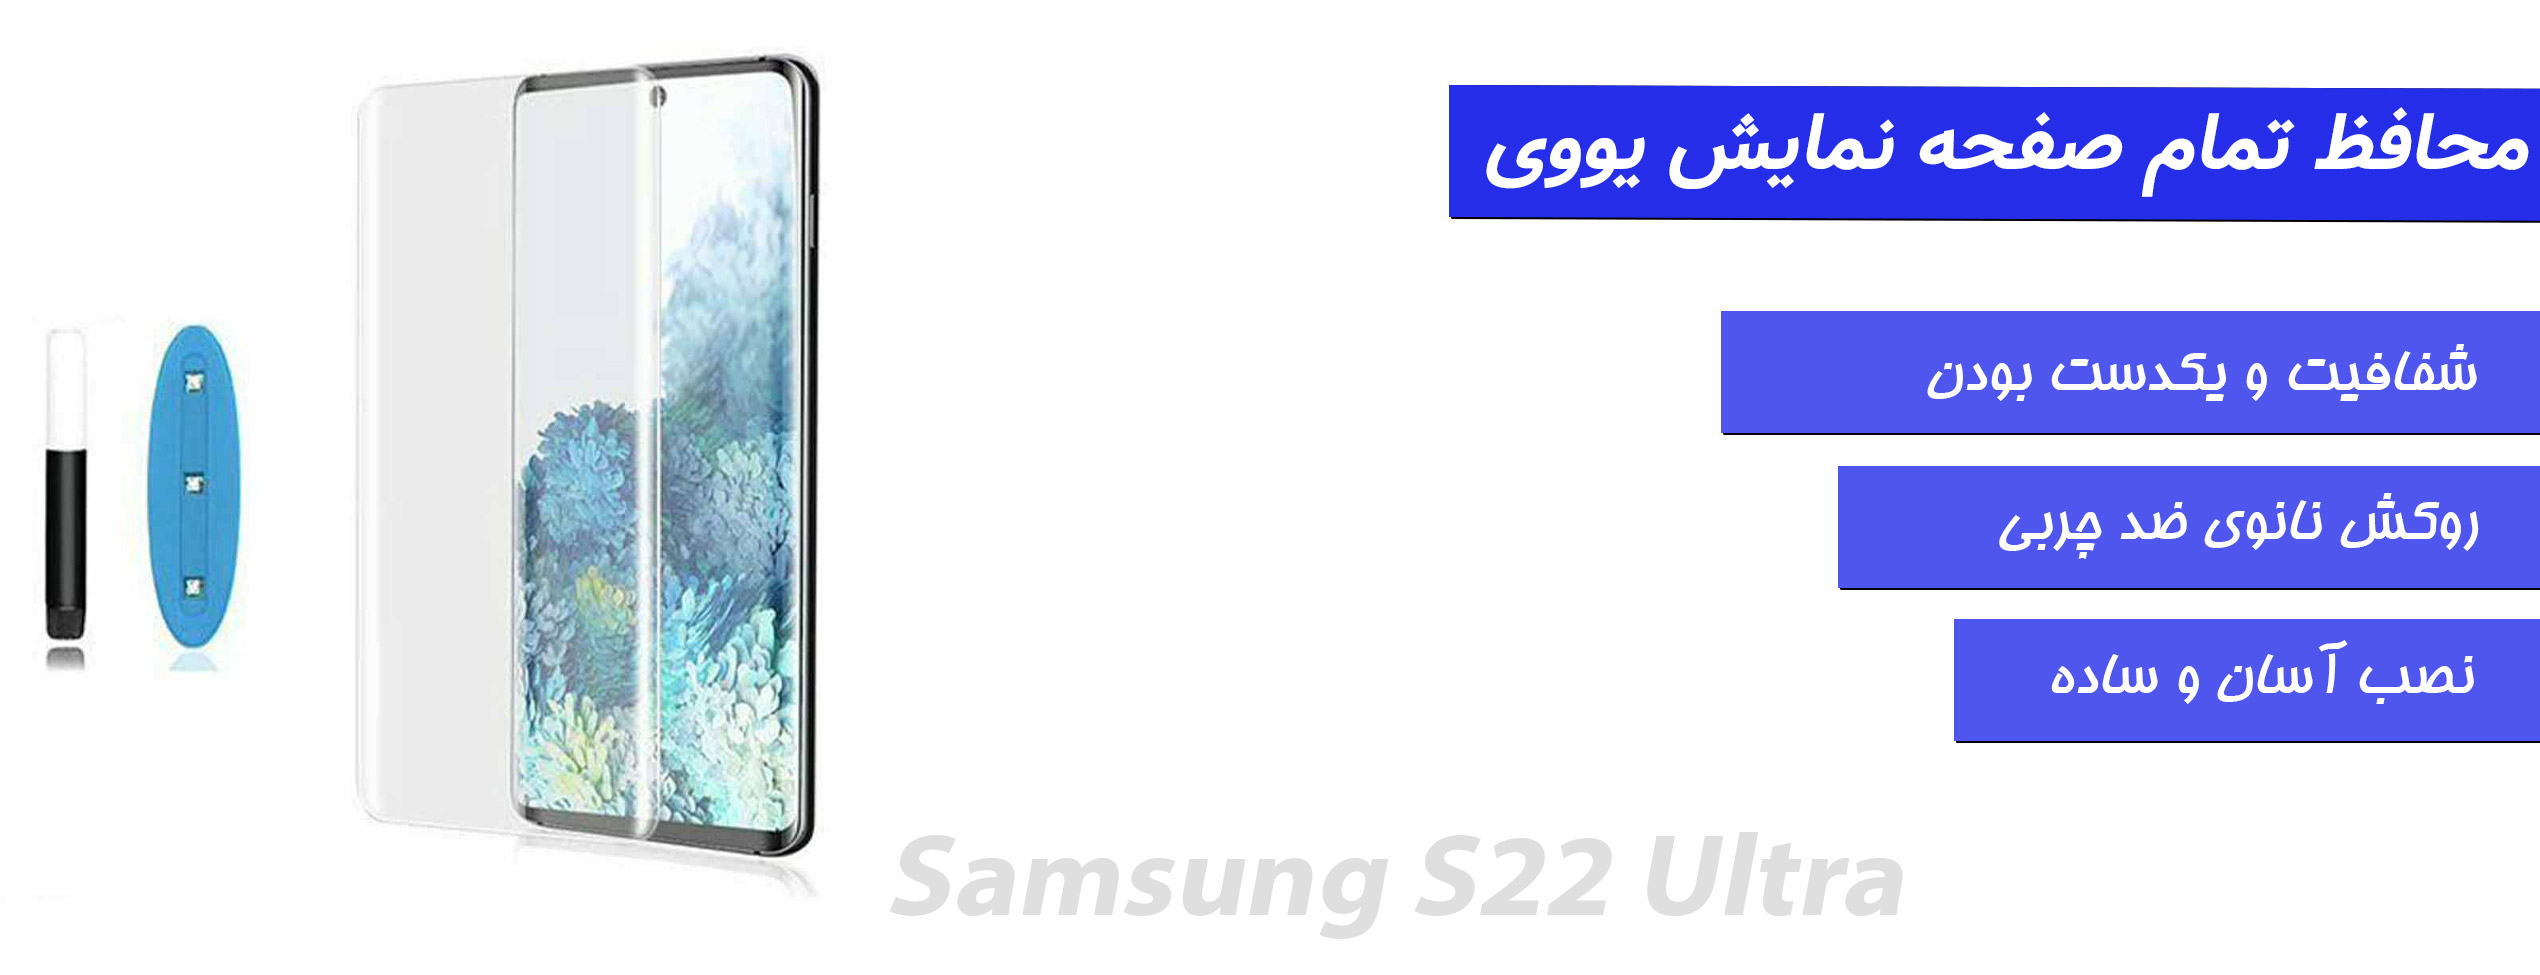 محافظ صفحه و گلس UV گوشی سامسونگ Samsung S22 Ultra